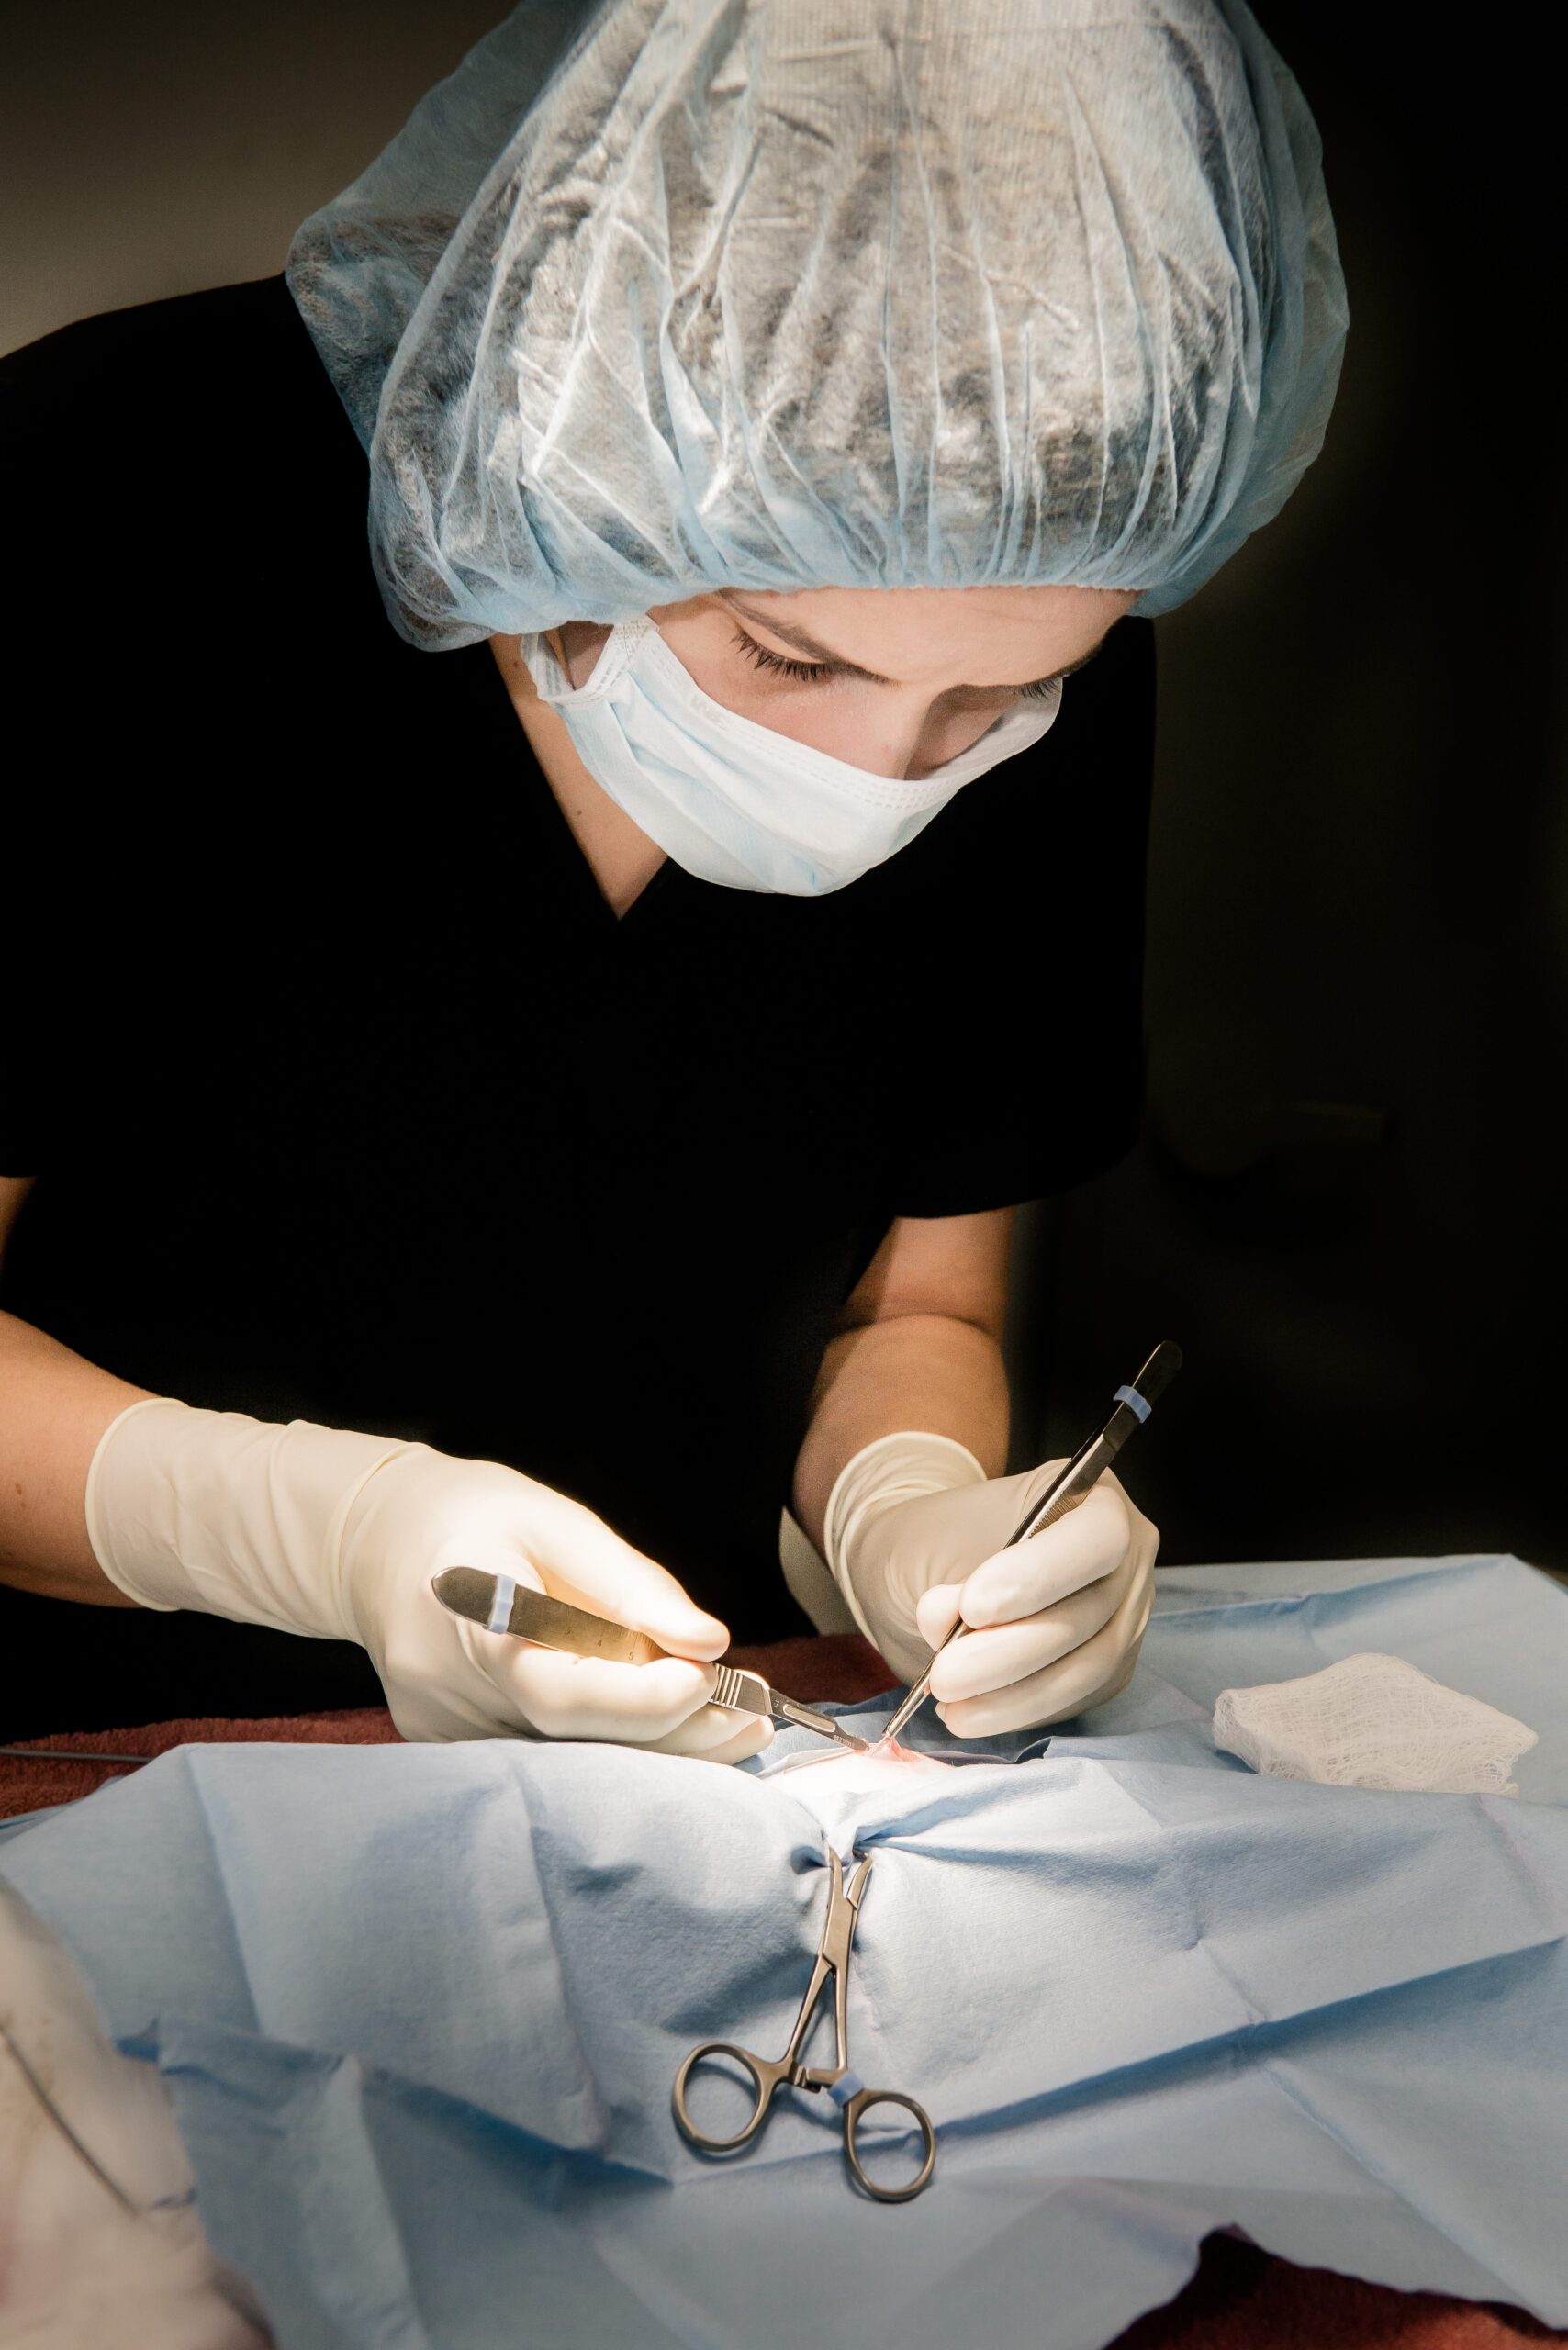 woman doing surgery